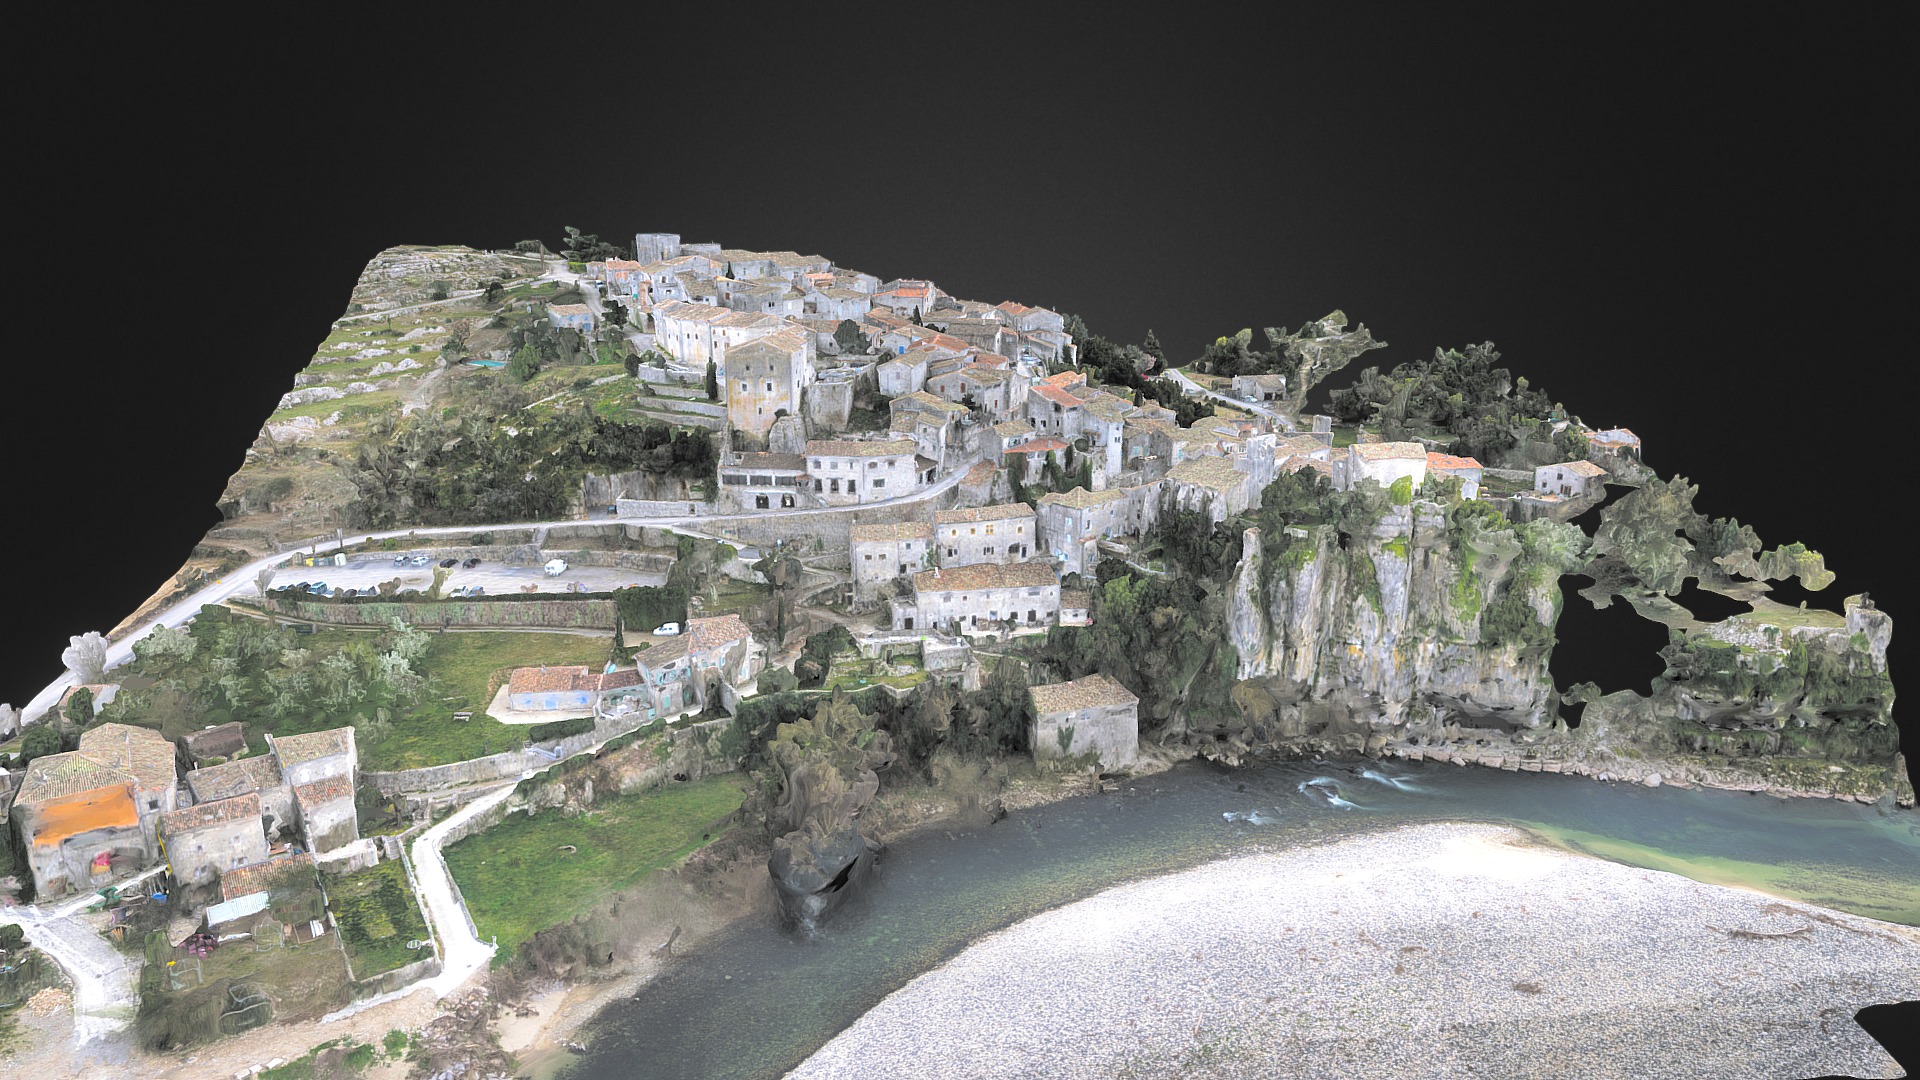 3D model Village of Balazuc, Ardèche, France - This is a 3D model of the Village of Balazuc, Ardèche, France. The 3D model is about a town on a cliff.